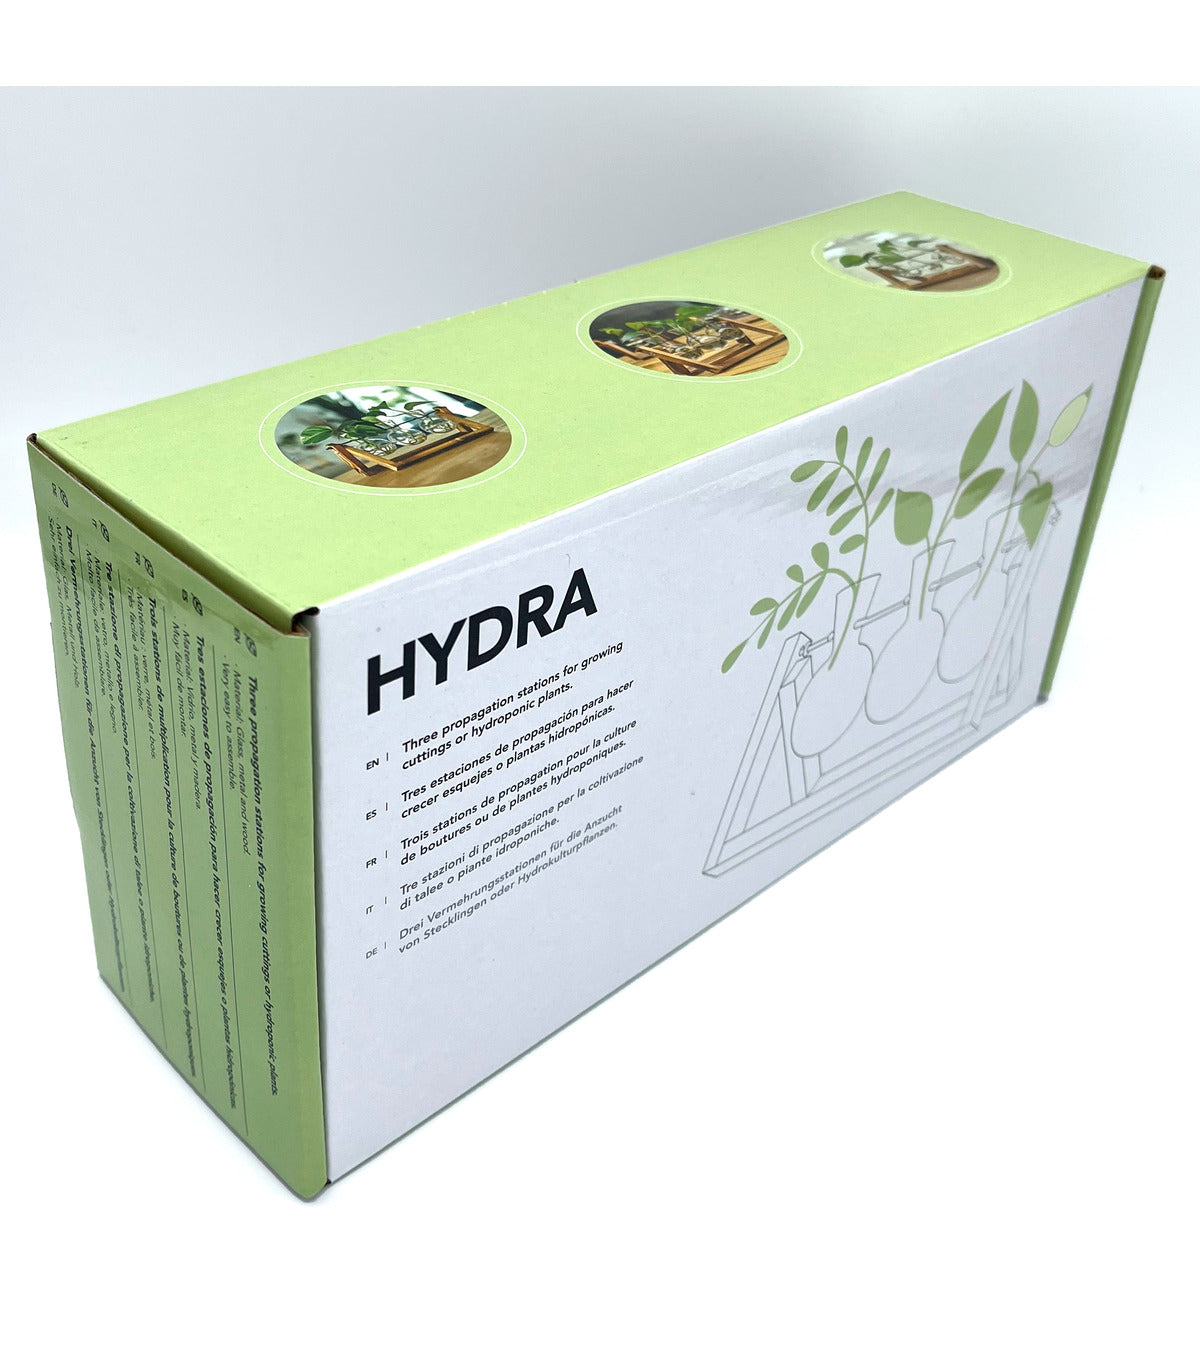 Hydra, propaga tus plantas